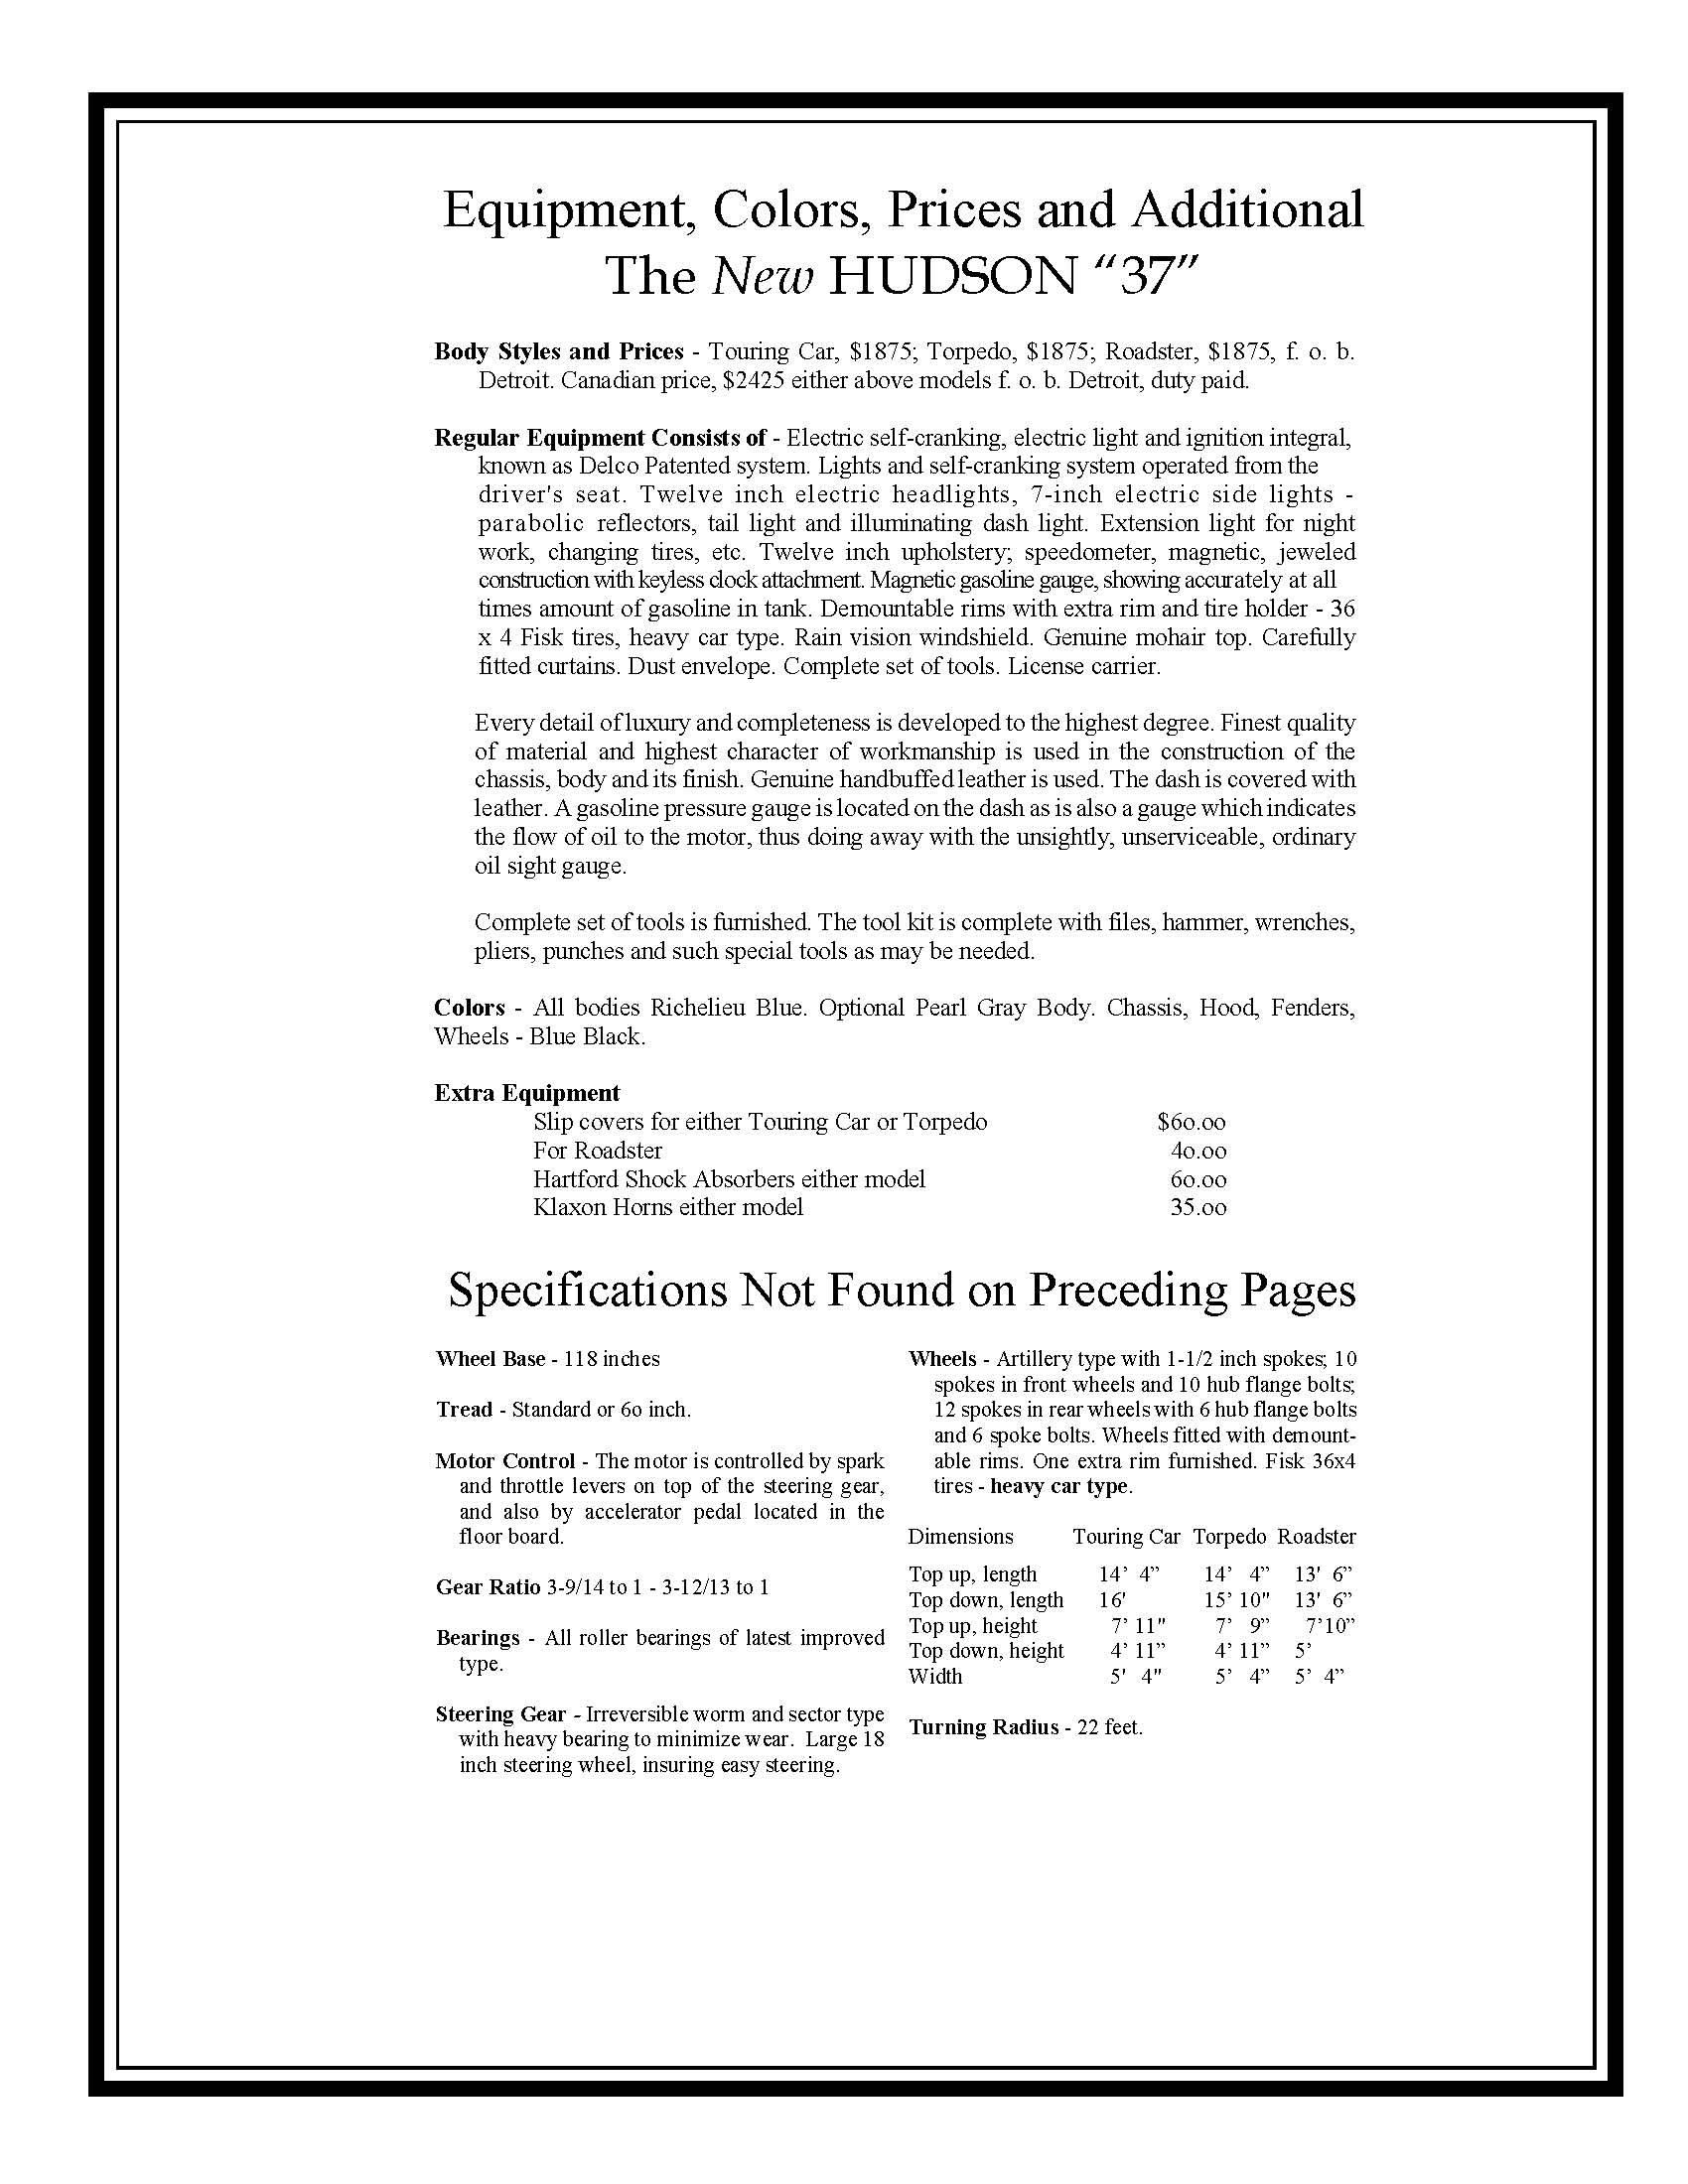 1913_Hudson_Instruction_Book-17